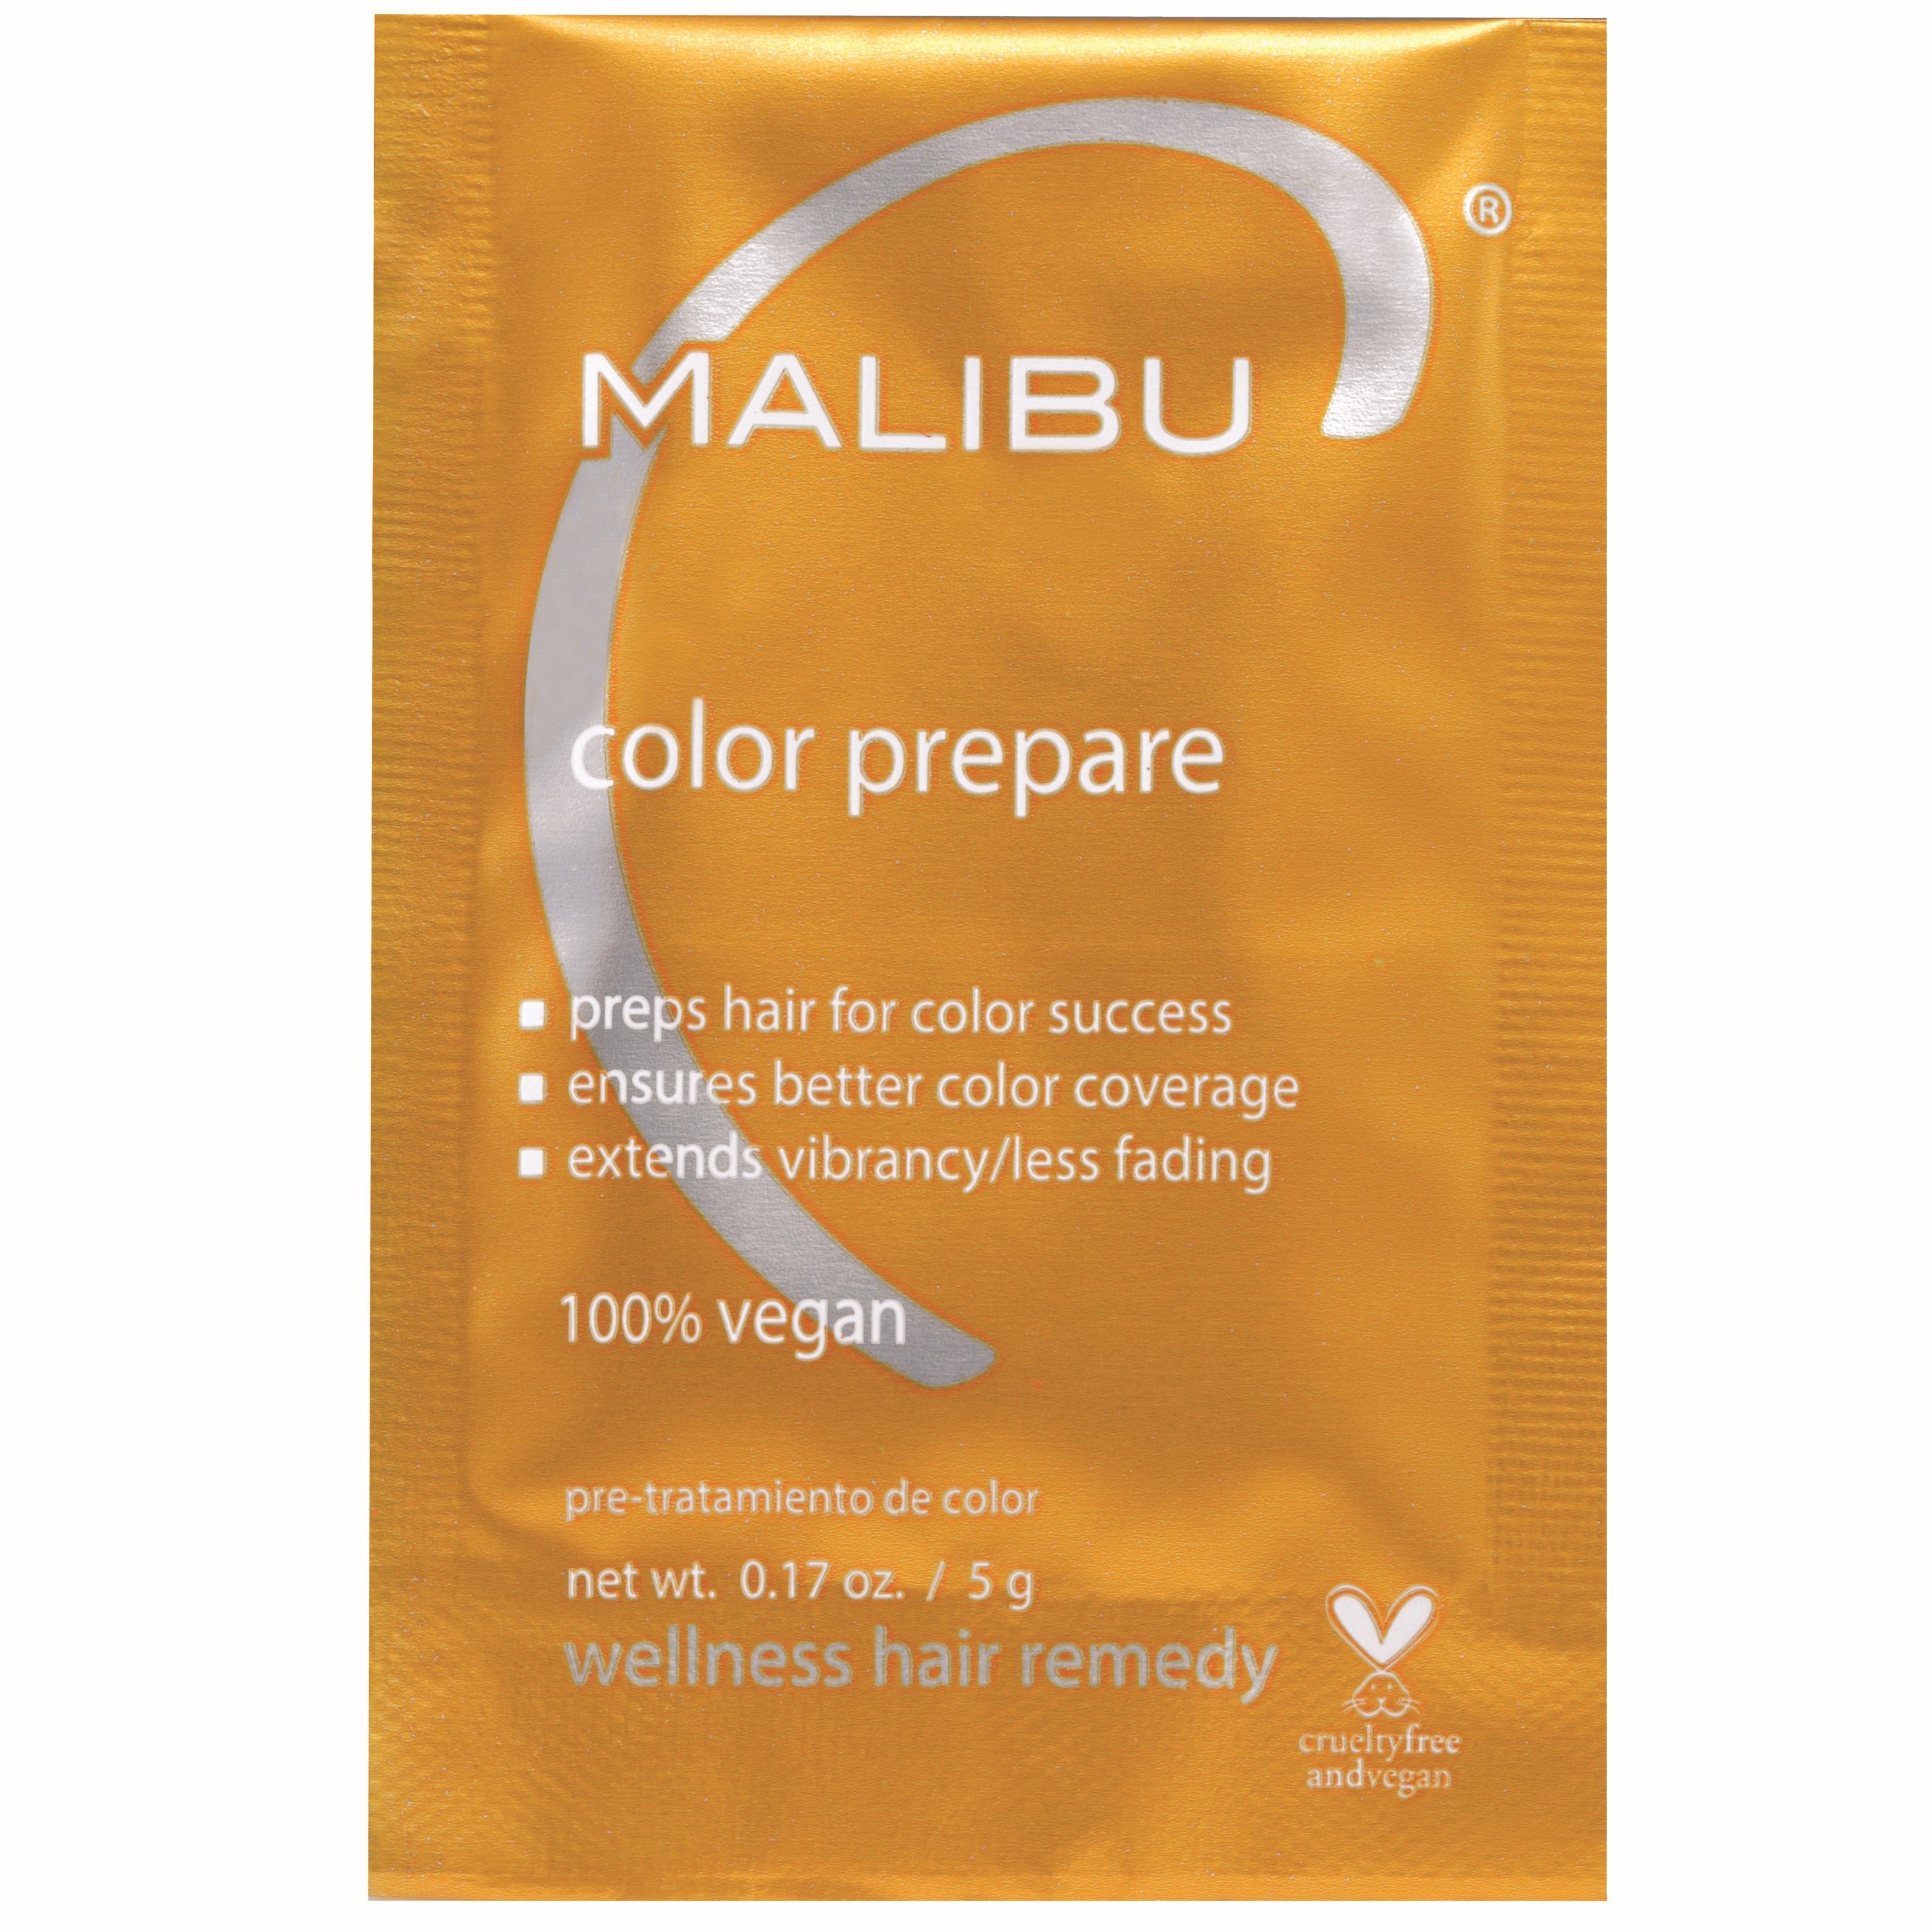 Malibu Hair Care Malibu C Color Prepare Wellness Hair Remedy, 1 Packet - 0.17 Oz , CVS